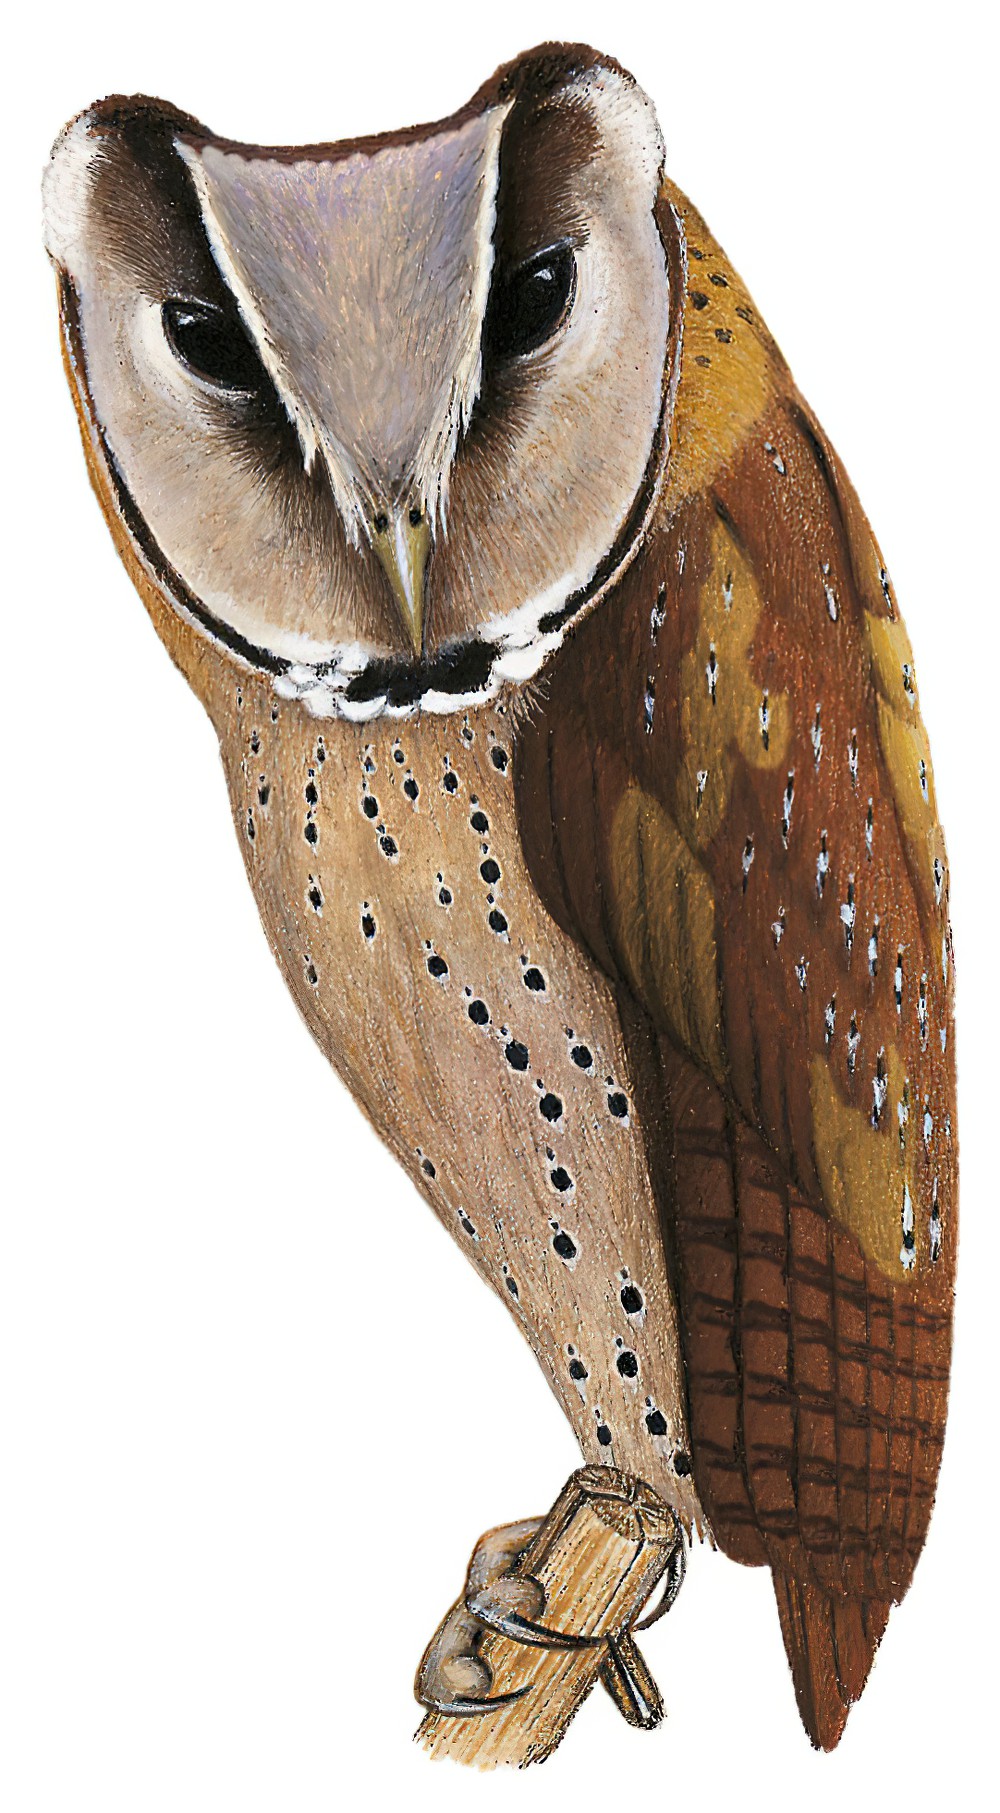 Sri Lanka Bay-Owl / Phodilus assimilis